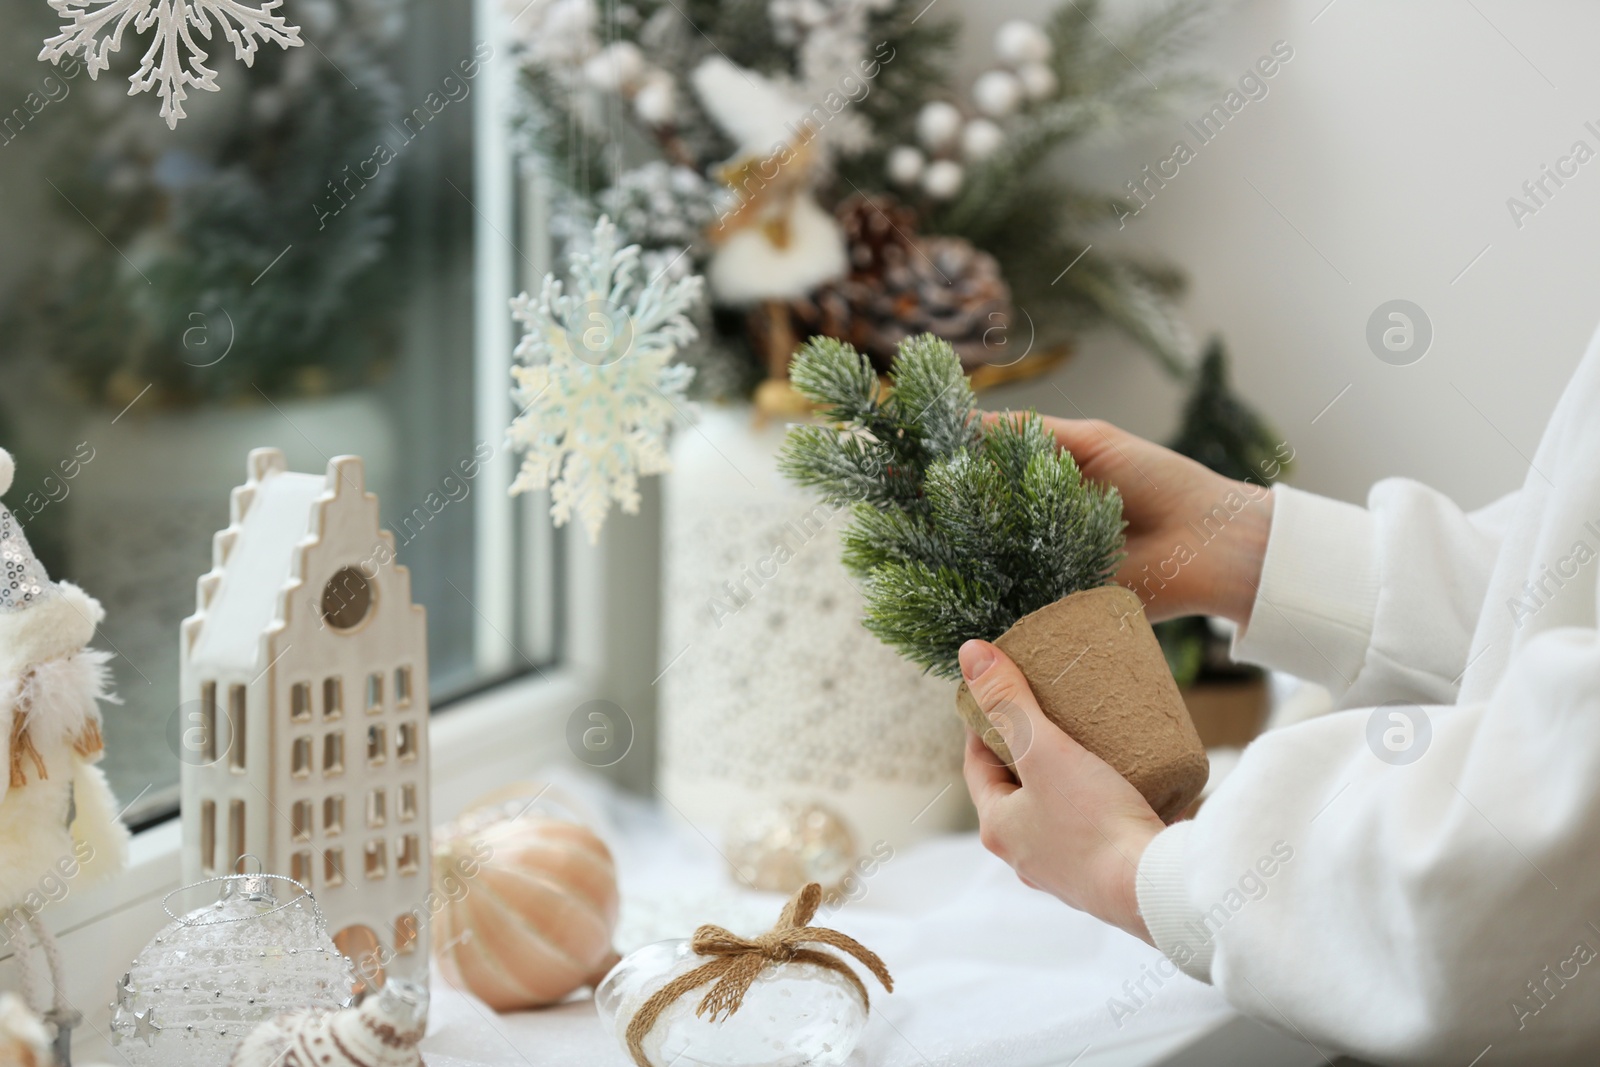 Photo of Woman holding small Christmas tree near window sill indoors, closeup